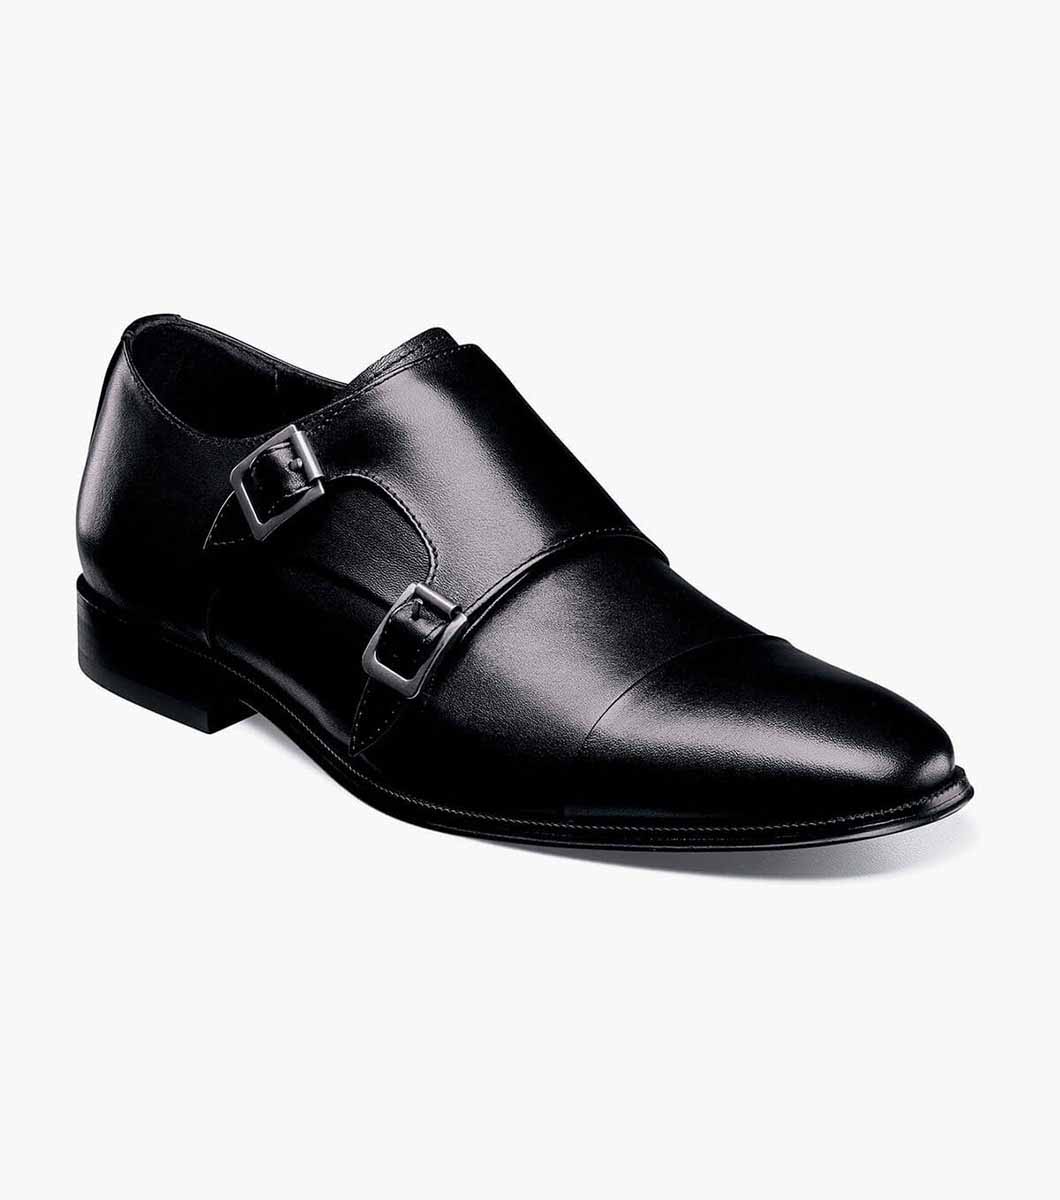 Men’s Dress Shoes | Black Cap Toe Monk Strap | Florsheim Jetson